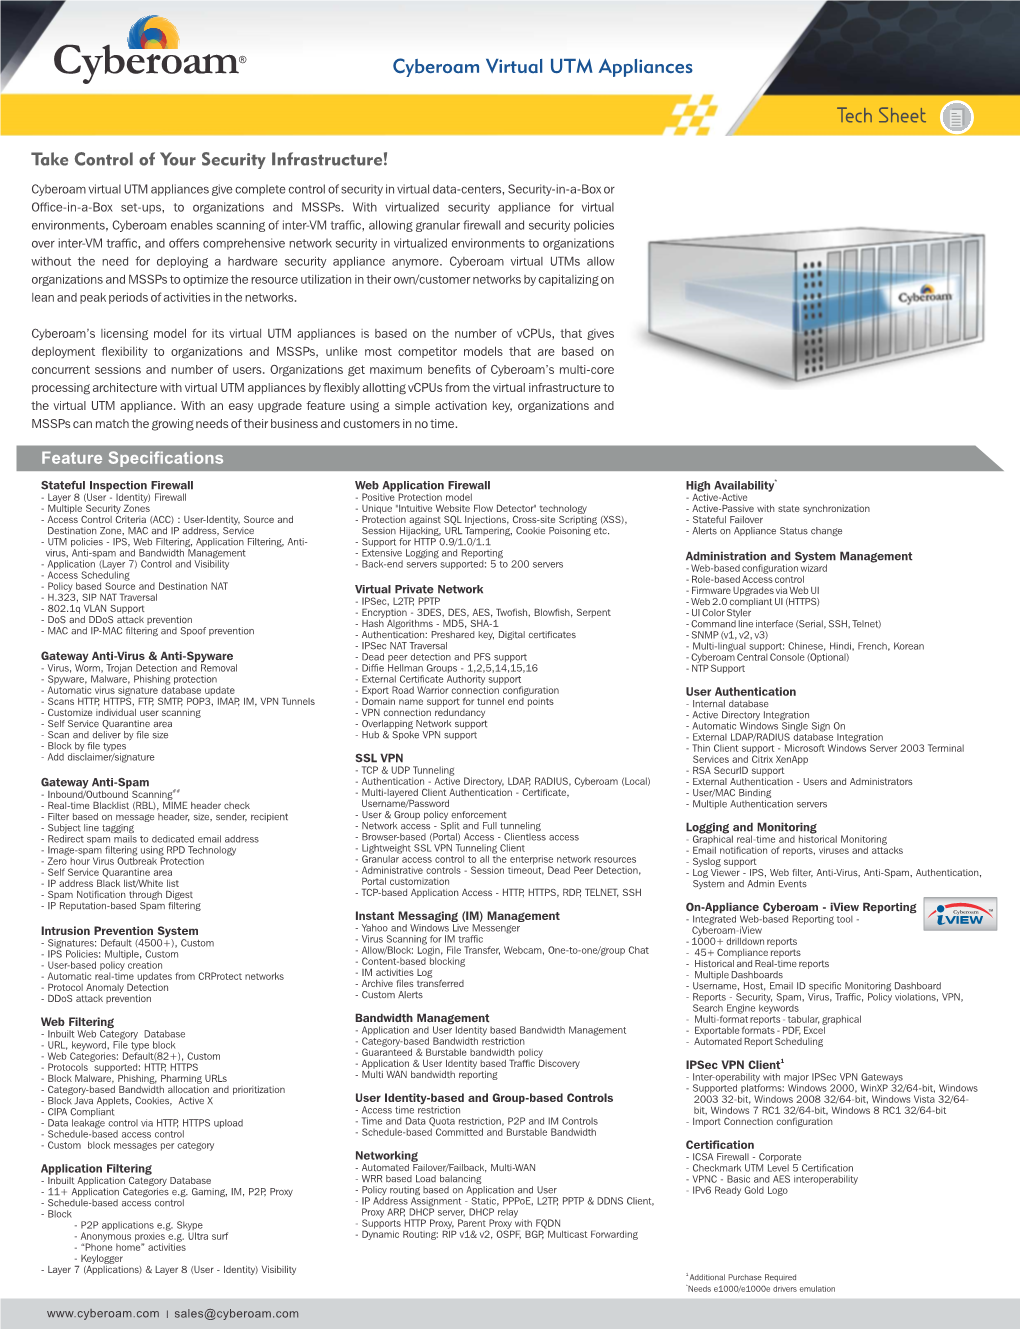 Cyberoam Virtual UTM Tech Sheet